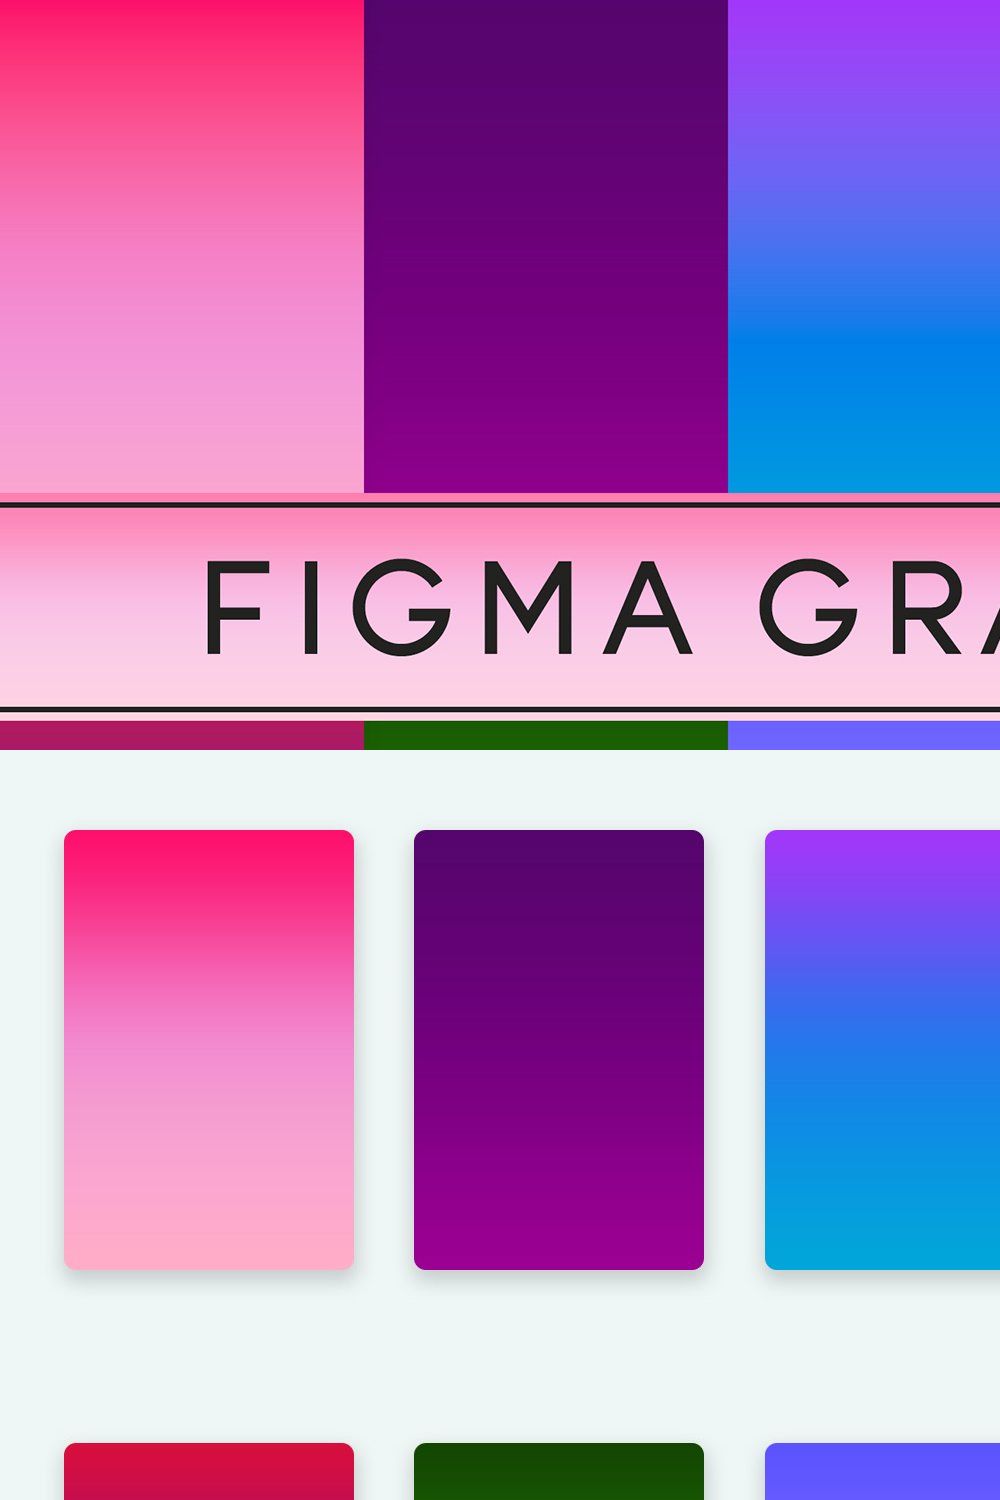 Figma Gradients pinterest preview image.